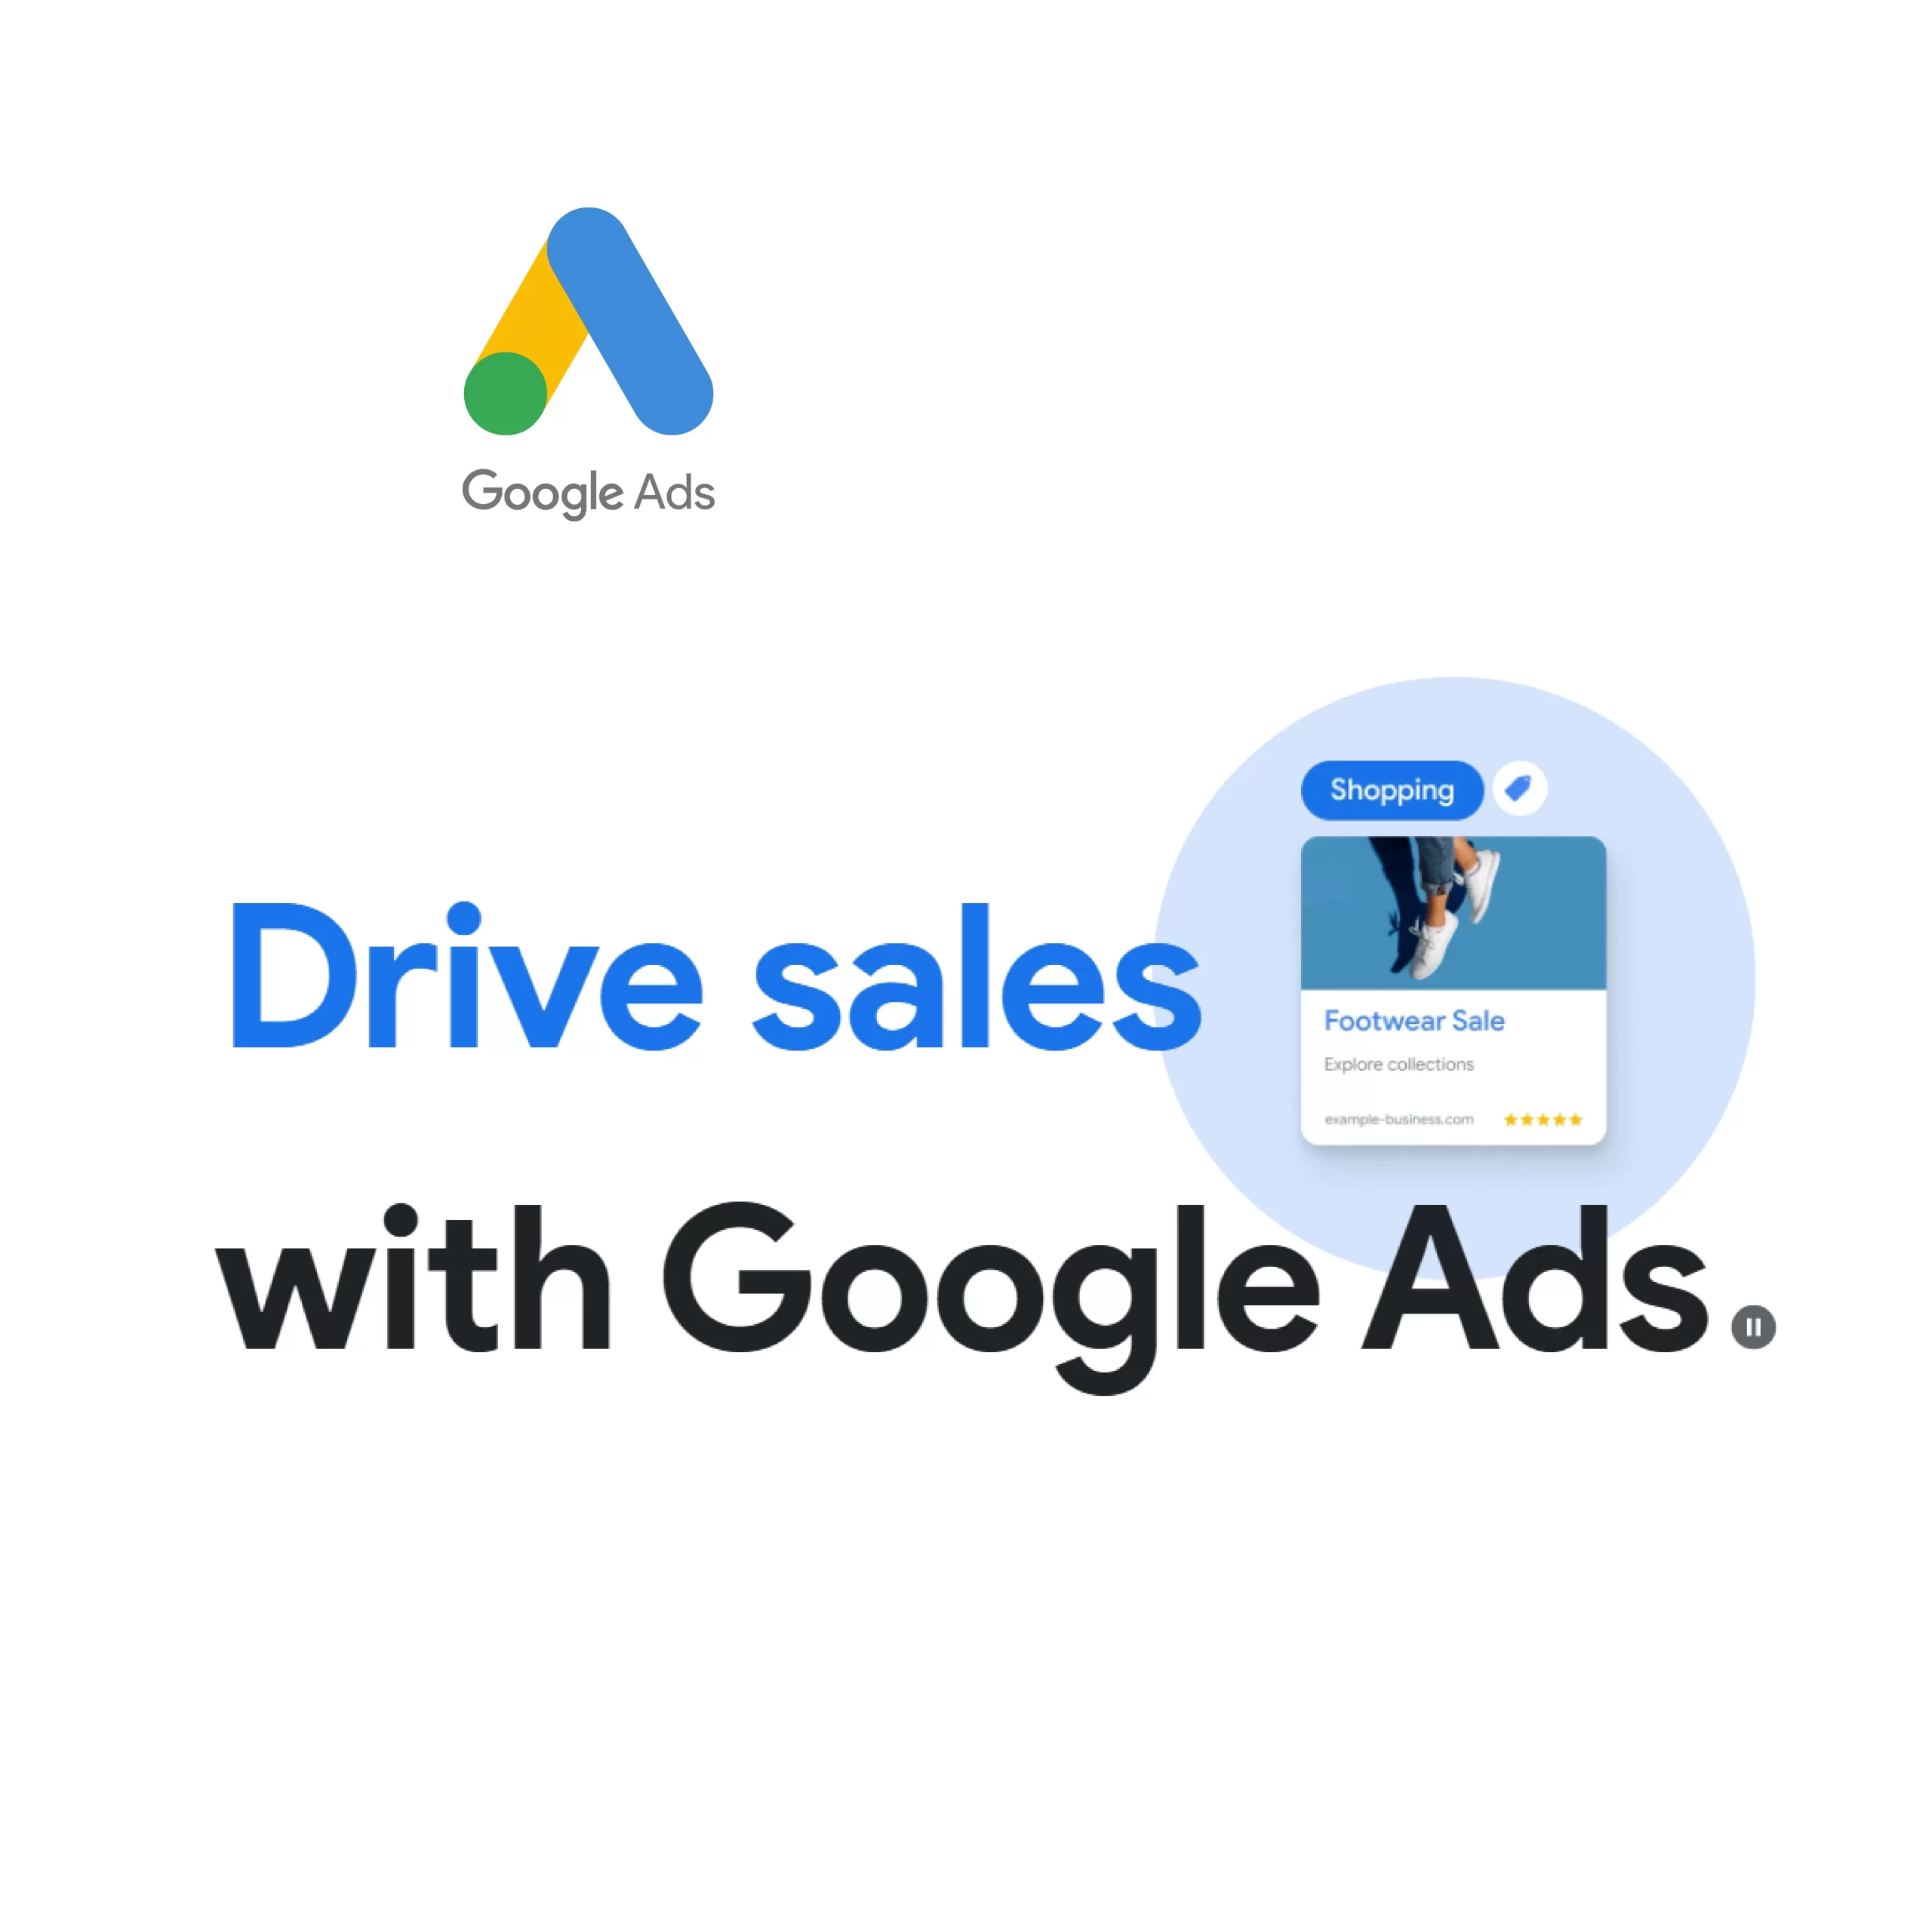 Google ads scaled